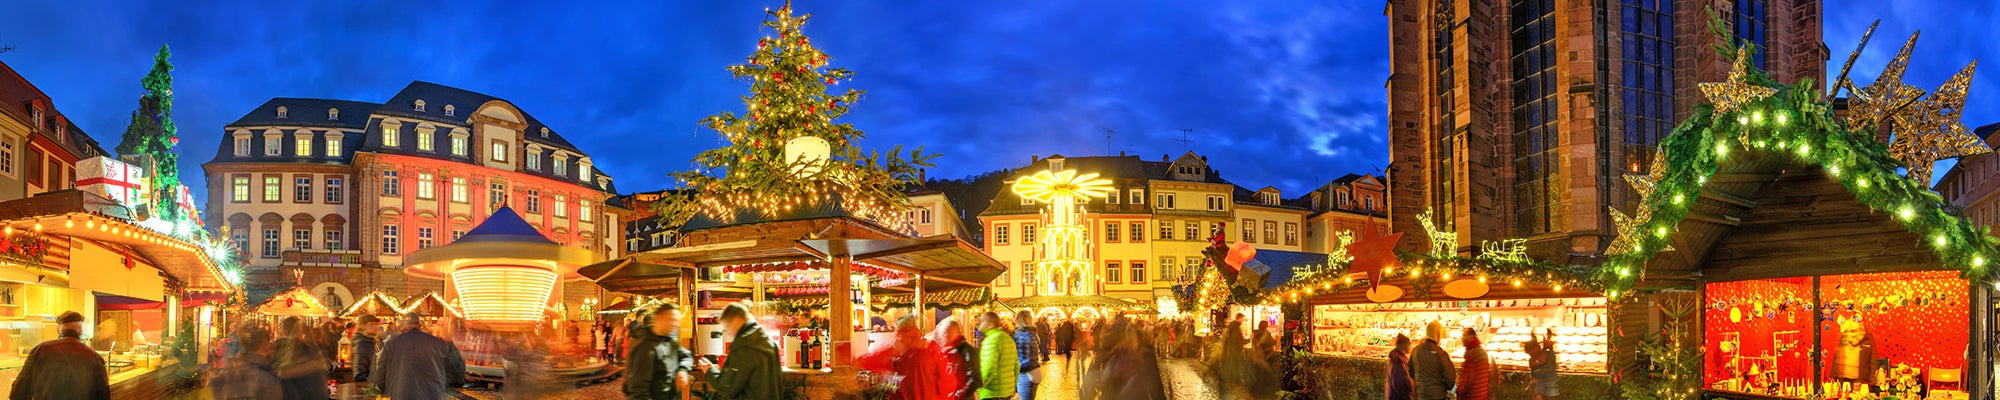 Holiday marketplace in Heidelberg